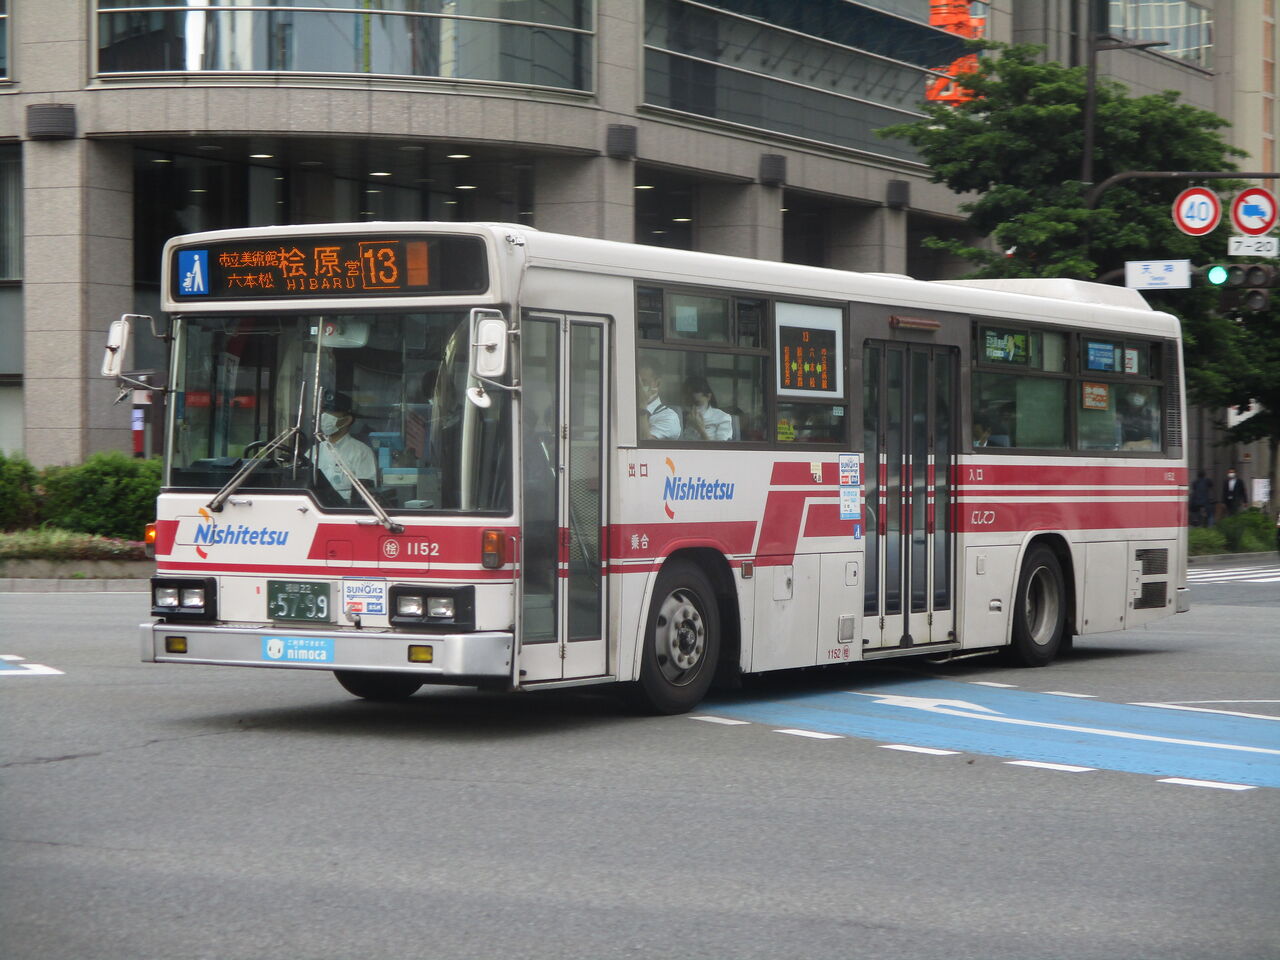 No 3553 西日本鉄道 バス 1152 桧原 トライランダーの蔵出し写真館 今日の一枚